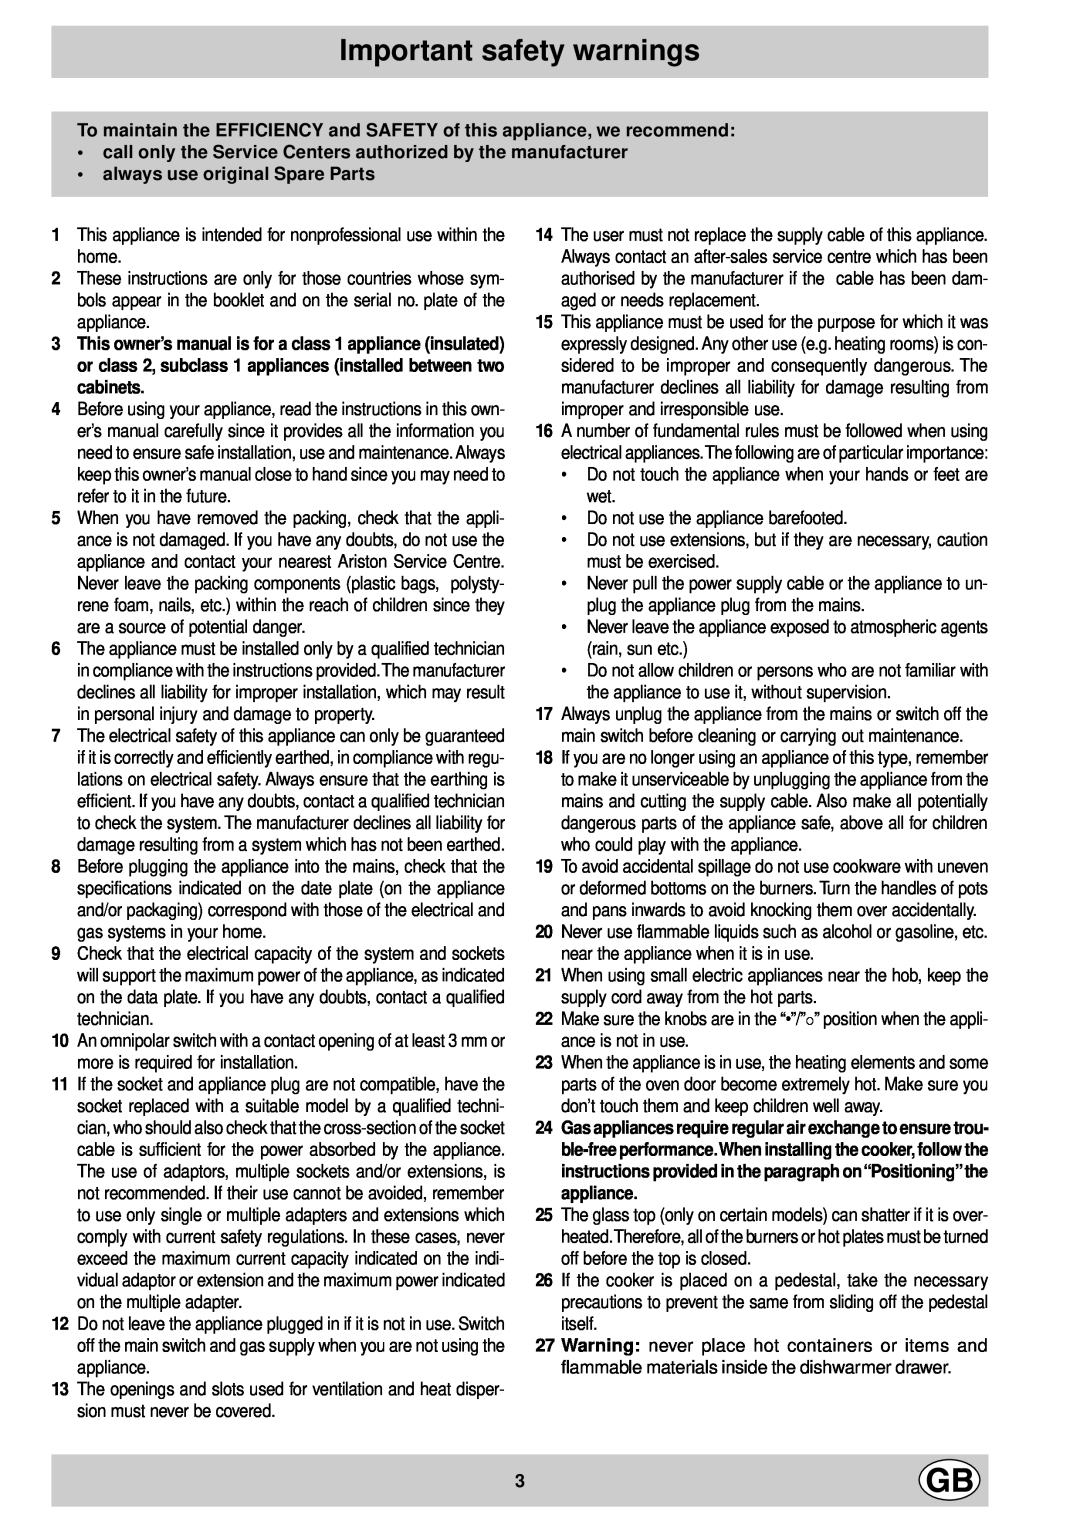 Indesit K3G11/G manual Important safety warnings 